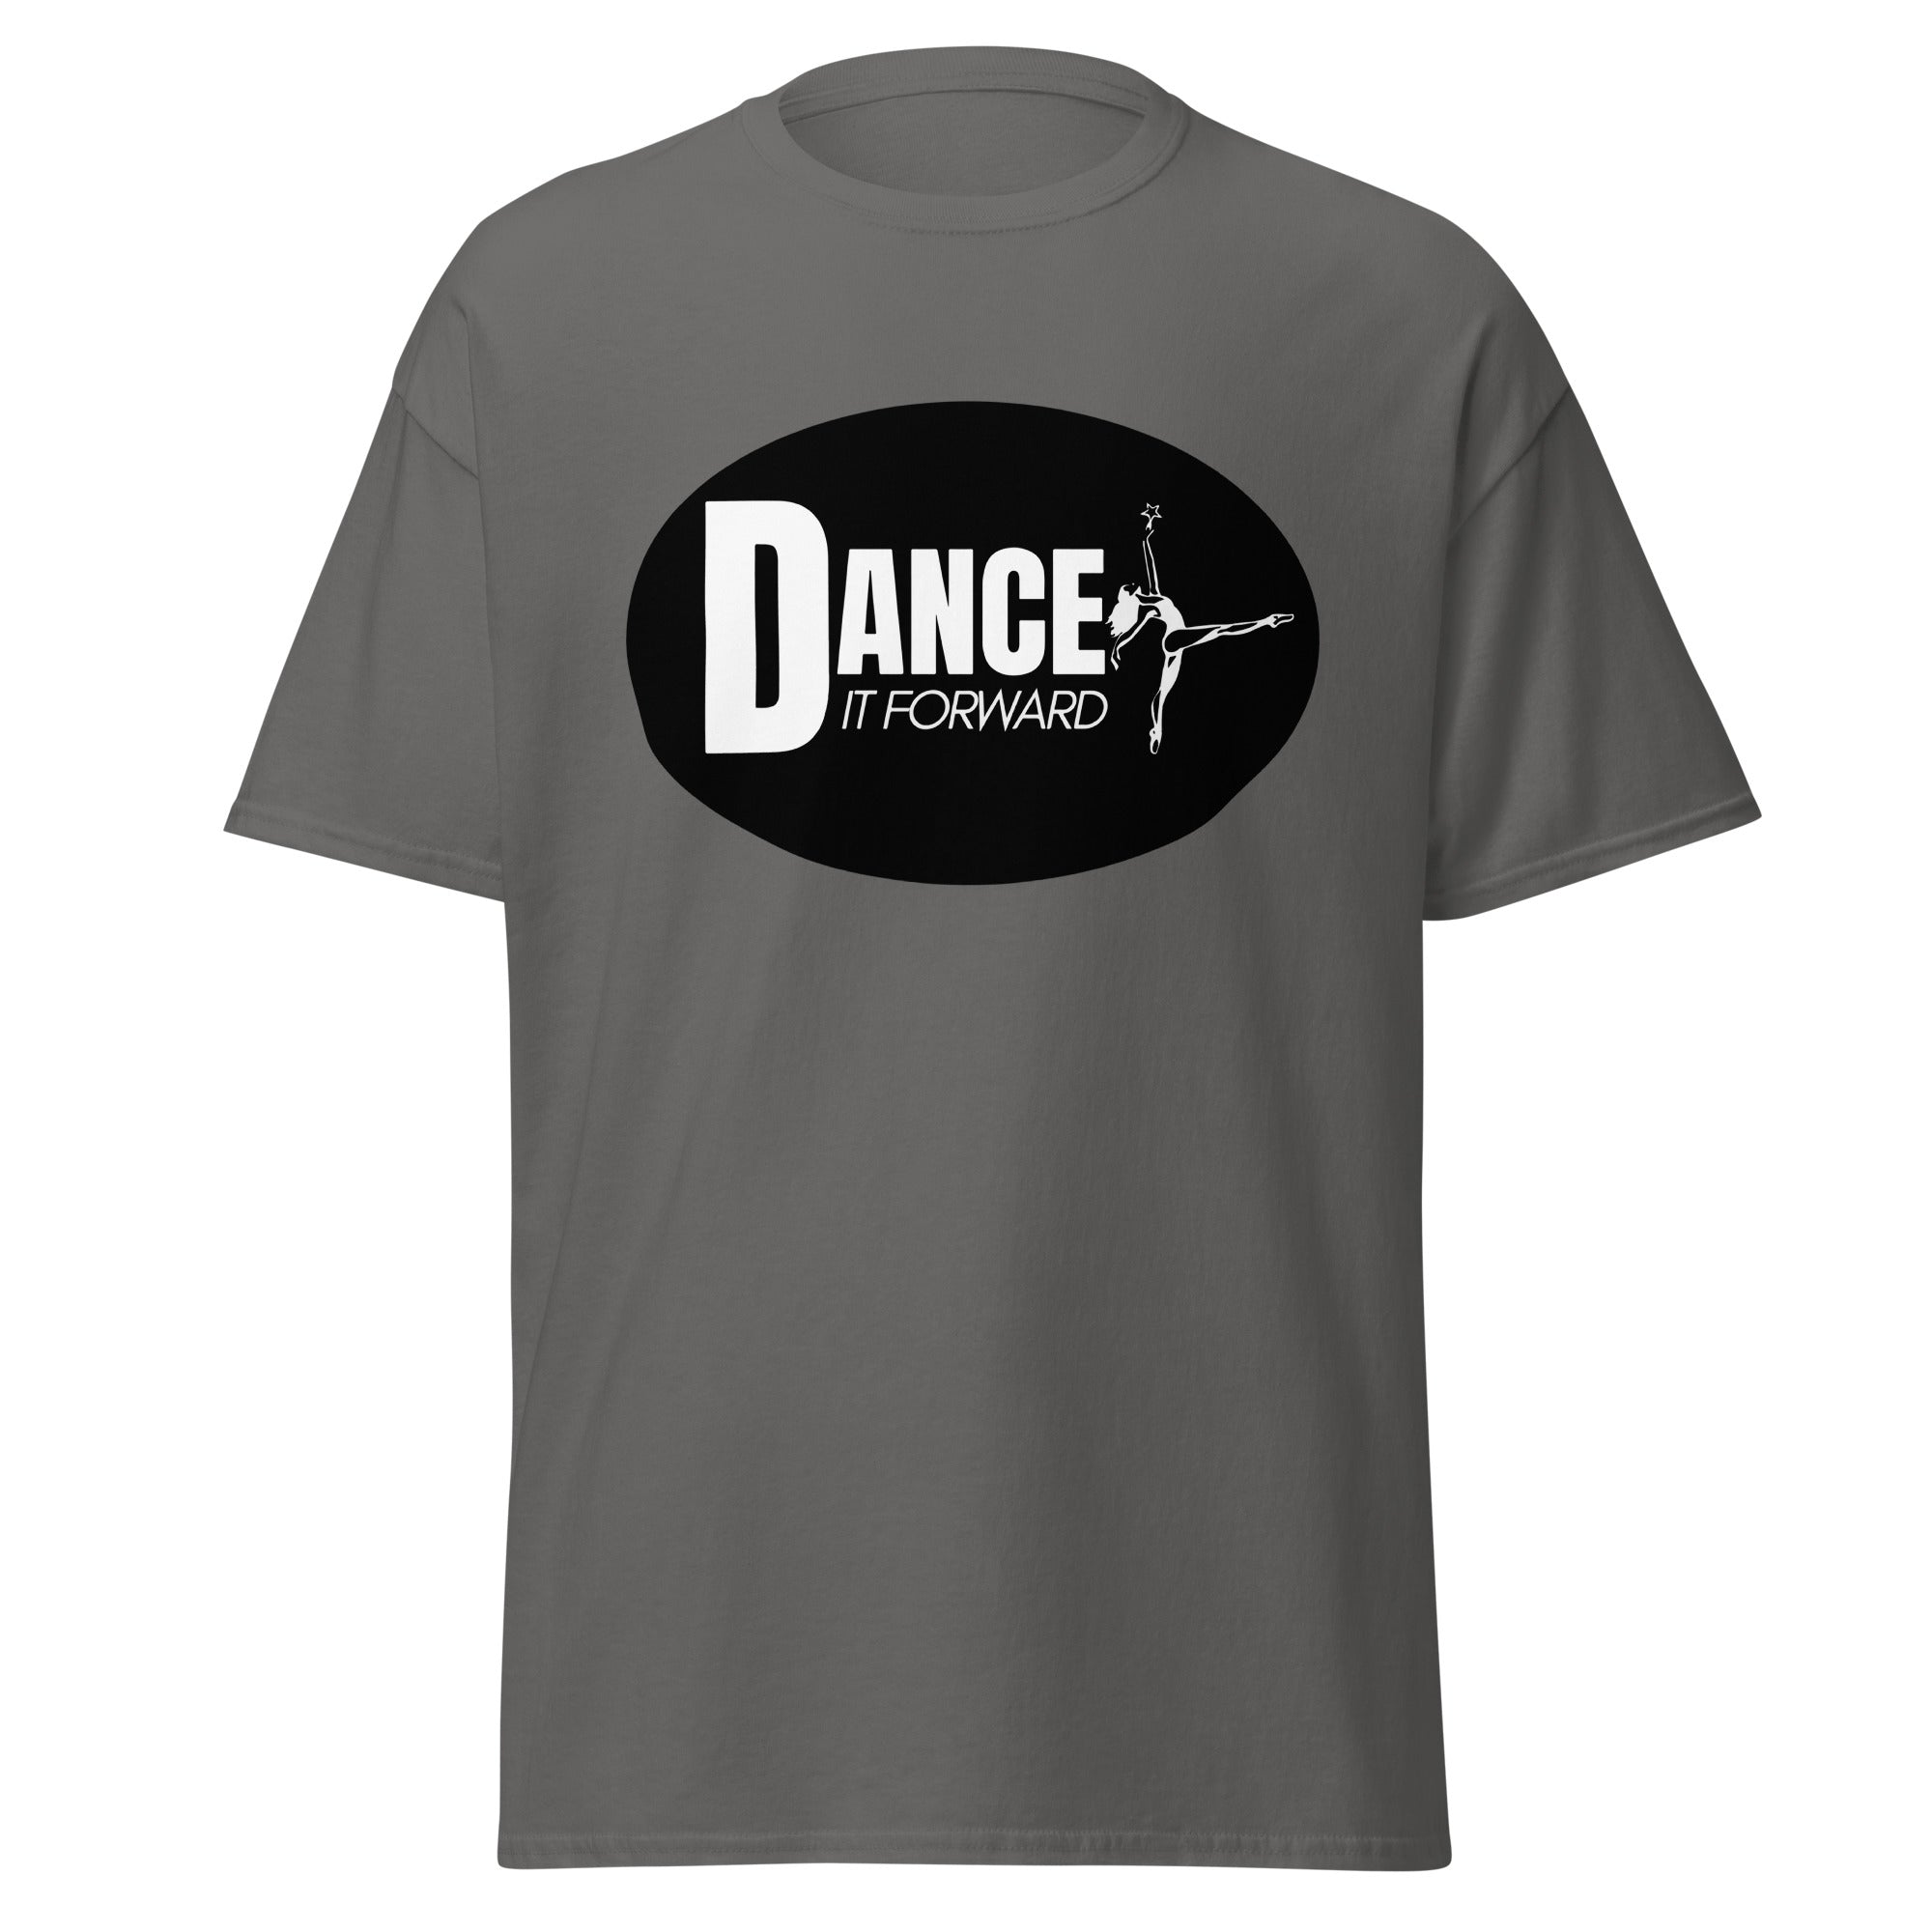 DIF/GYD Men's classic tee (Dance it Forward)